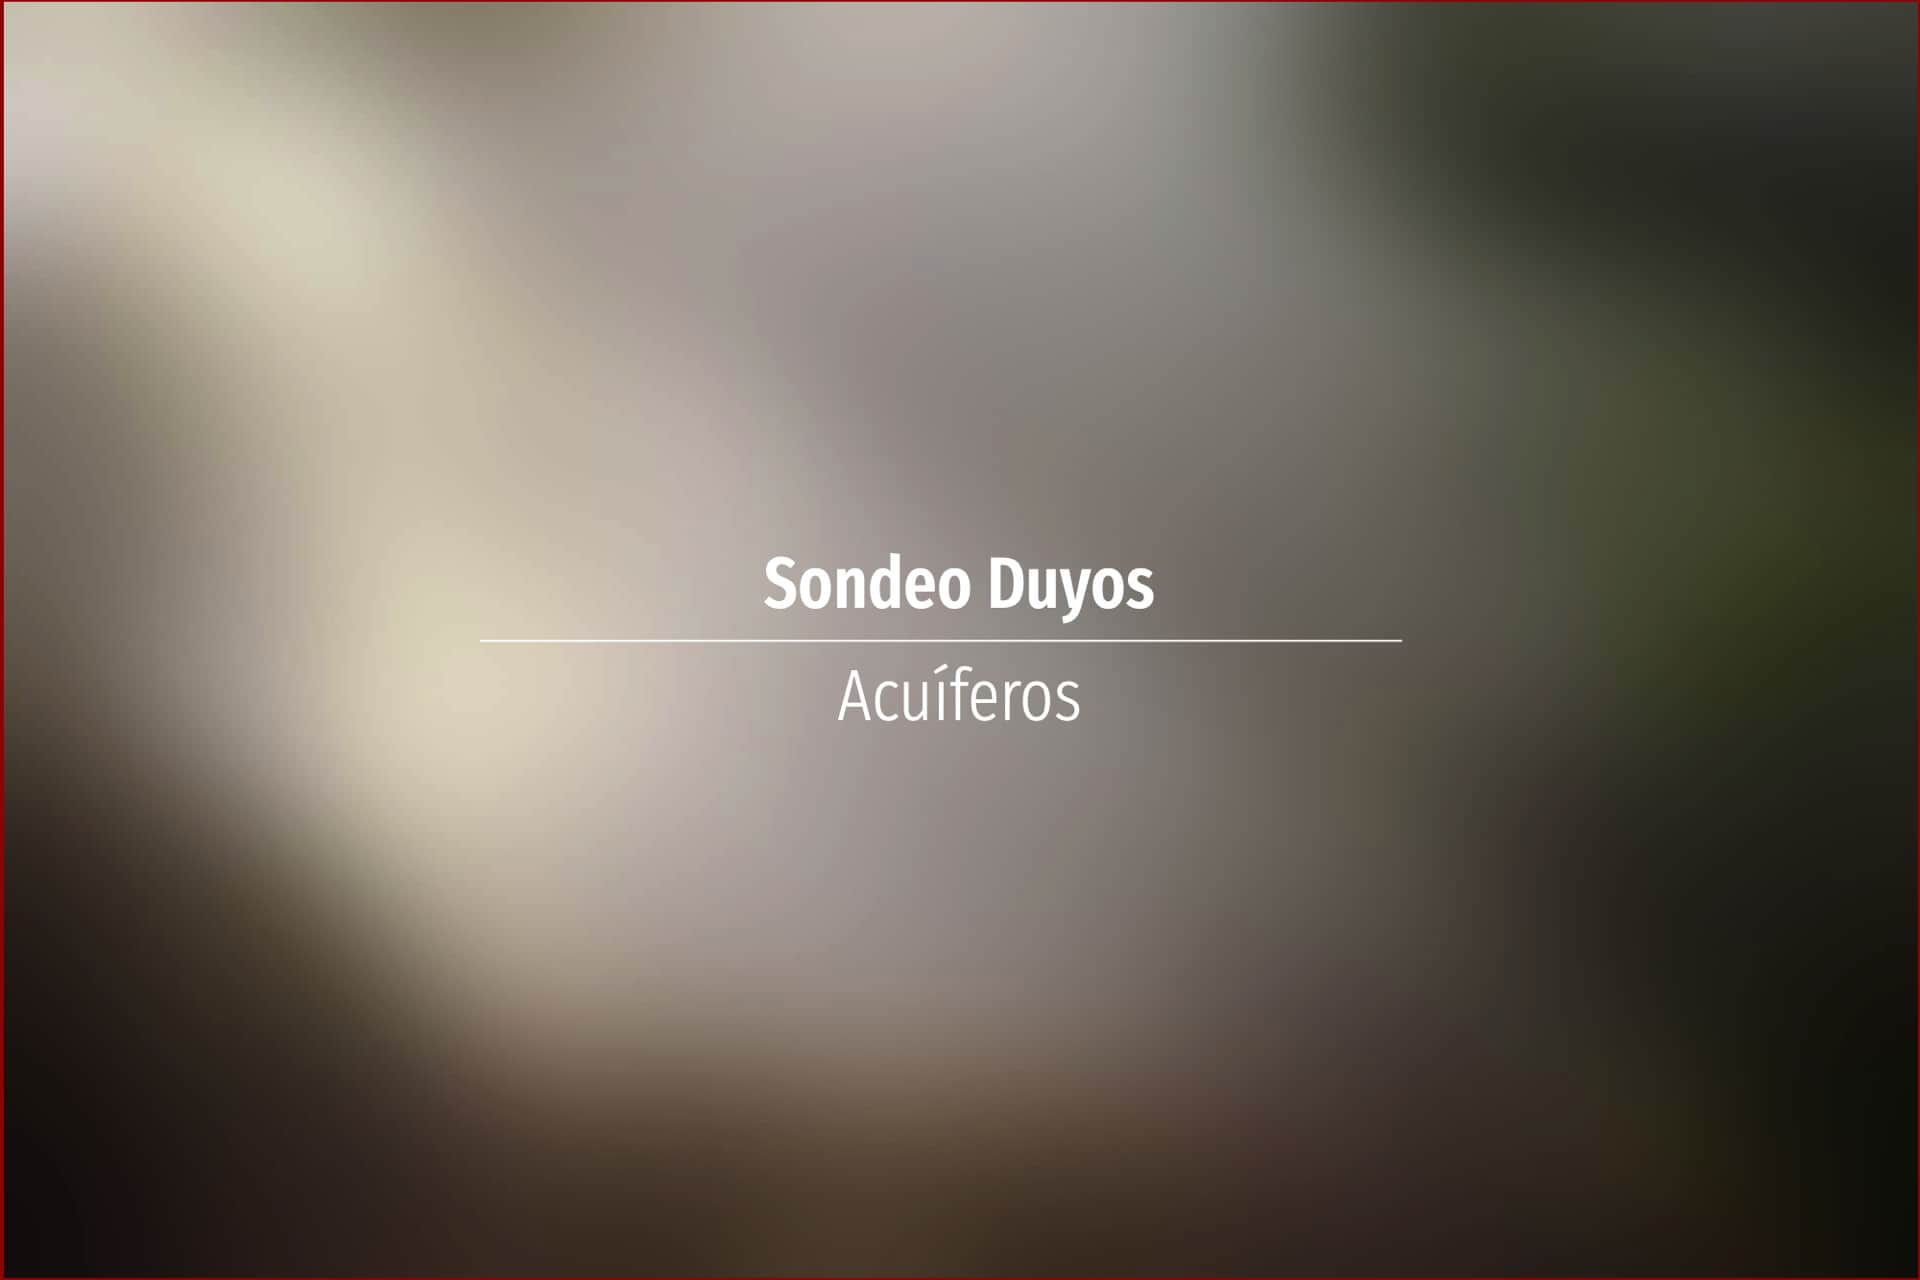 Sondeo Duyos